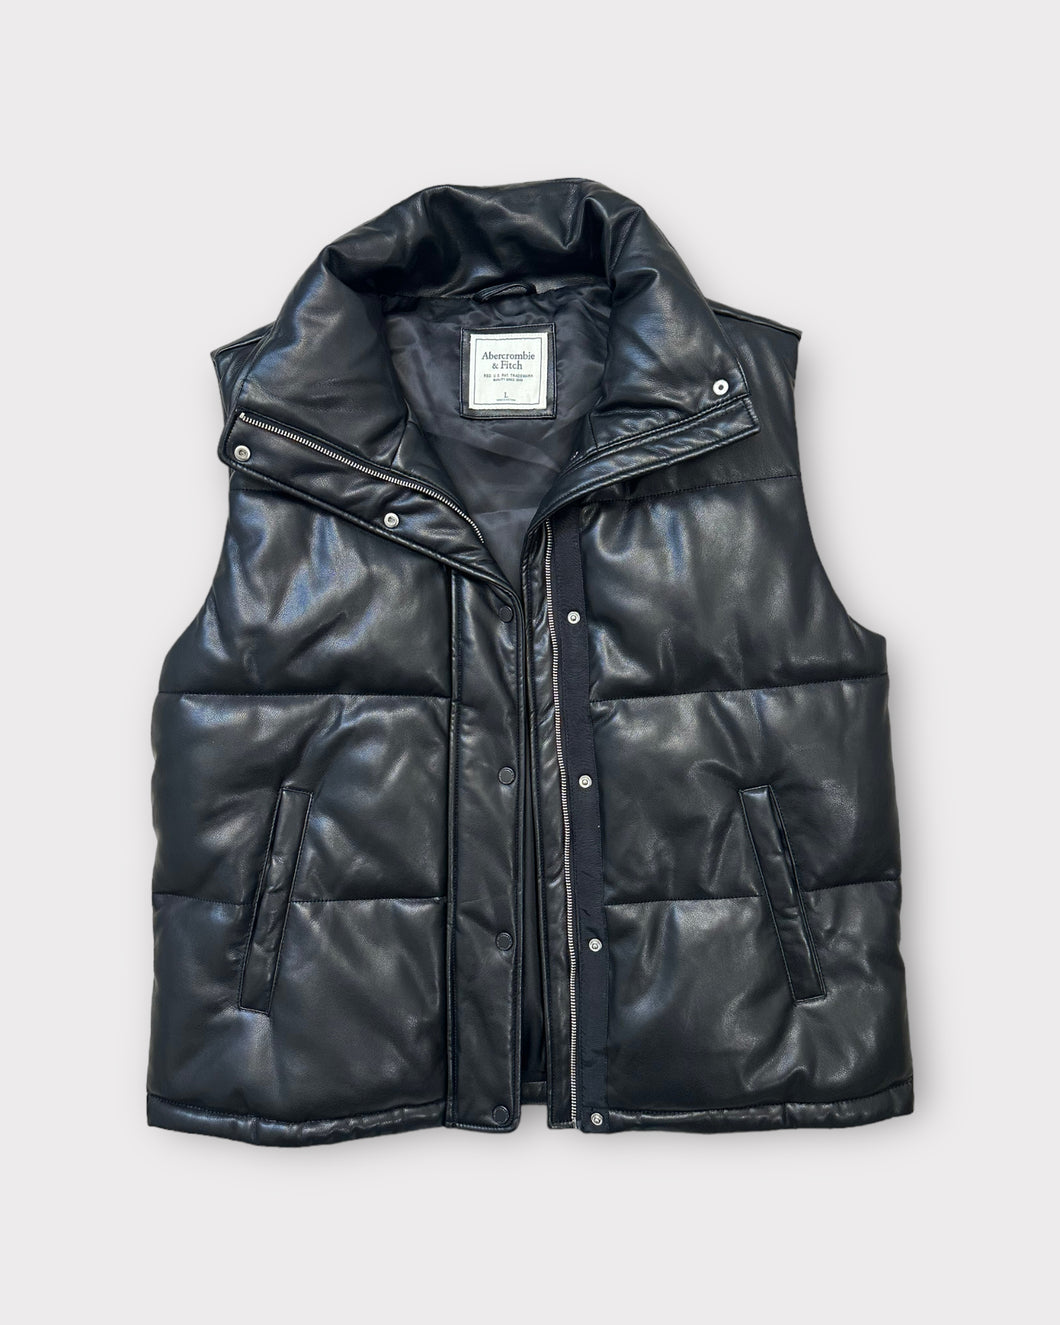 Abercrombie & Fitch Vegan Leather Black Puffer Vest (L)